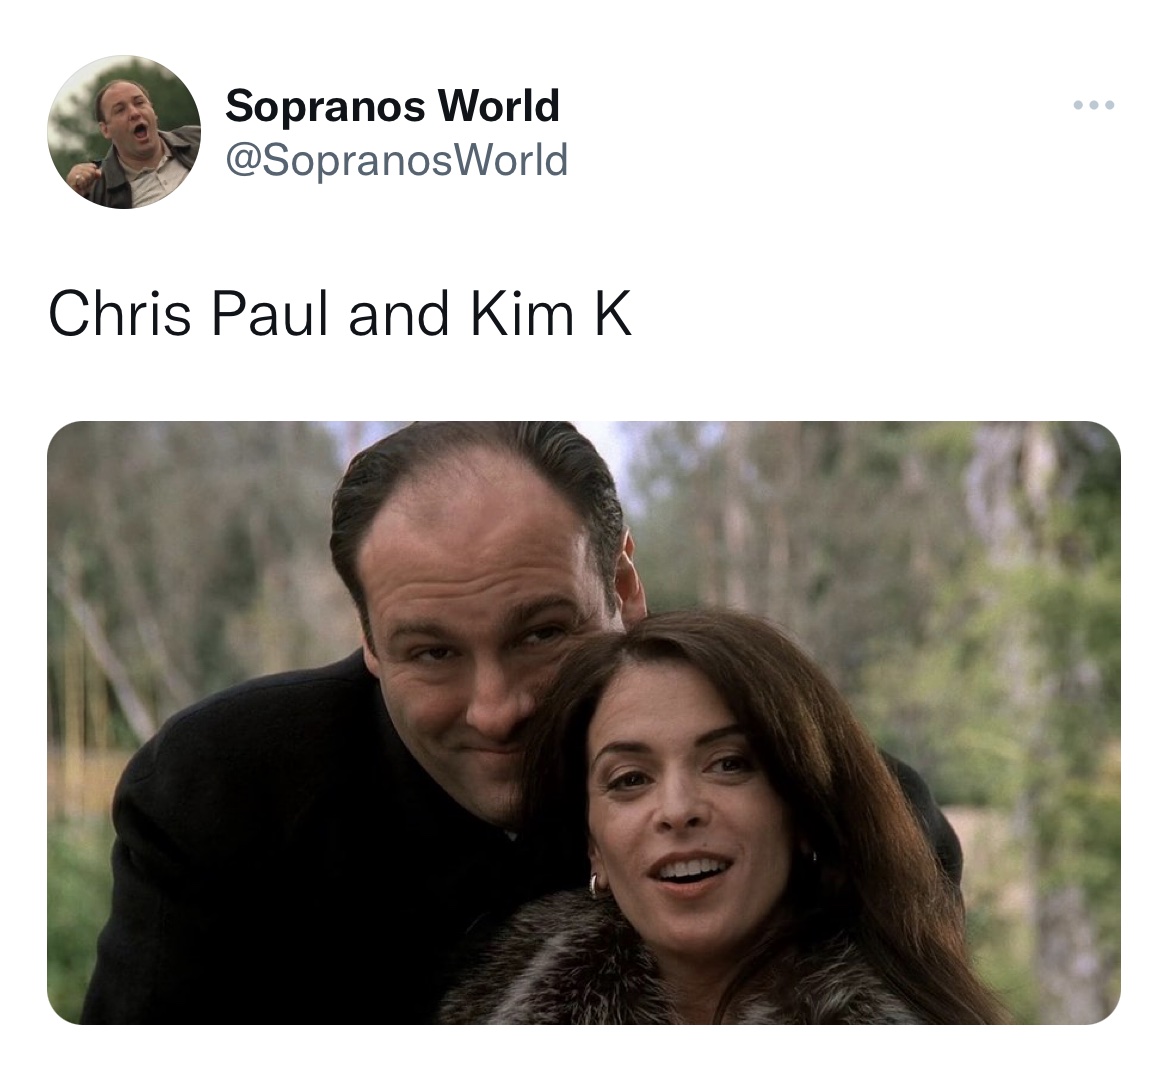 Chris Paul and Kim K memes - gloria trillo los soprano - Sopranos World Chris Paul and Kim K